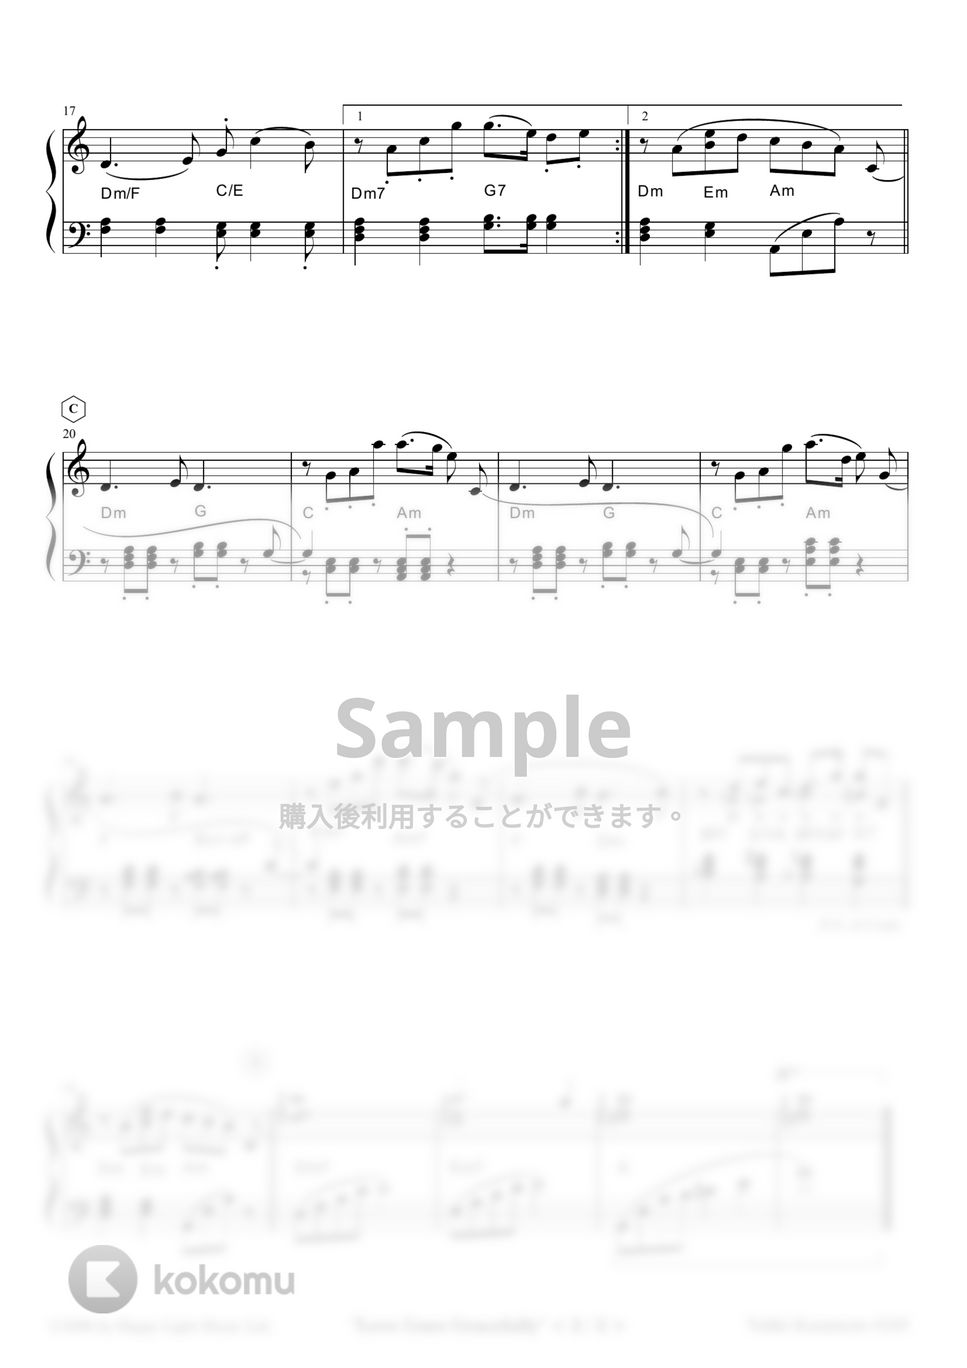 Yuhki Kuramoto - Love Goes Gracefully (Easy Ver.) by Yuhki Kuramoto